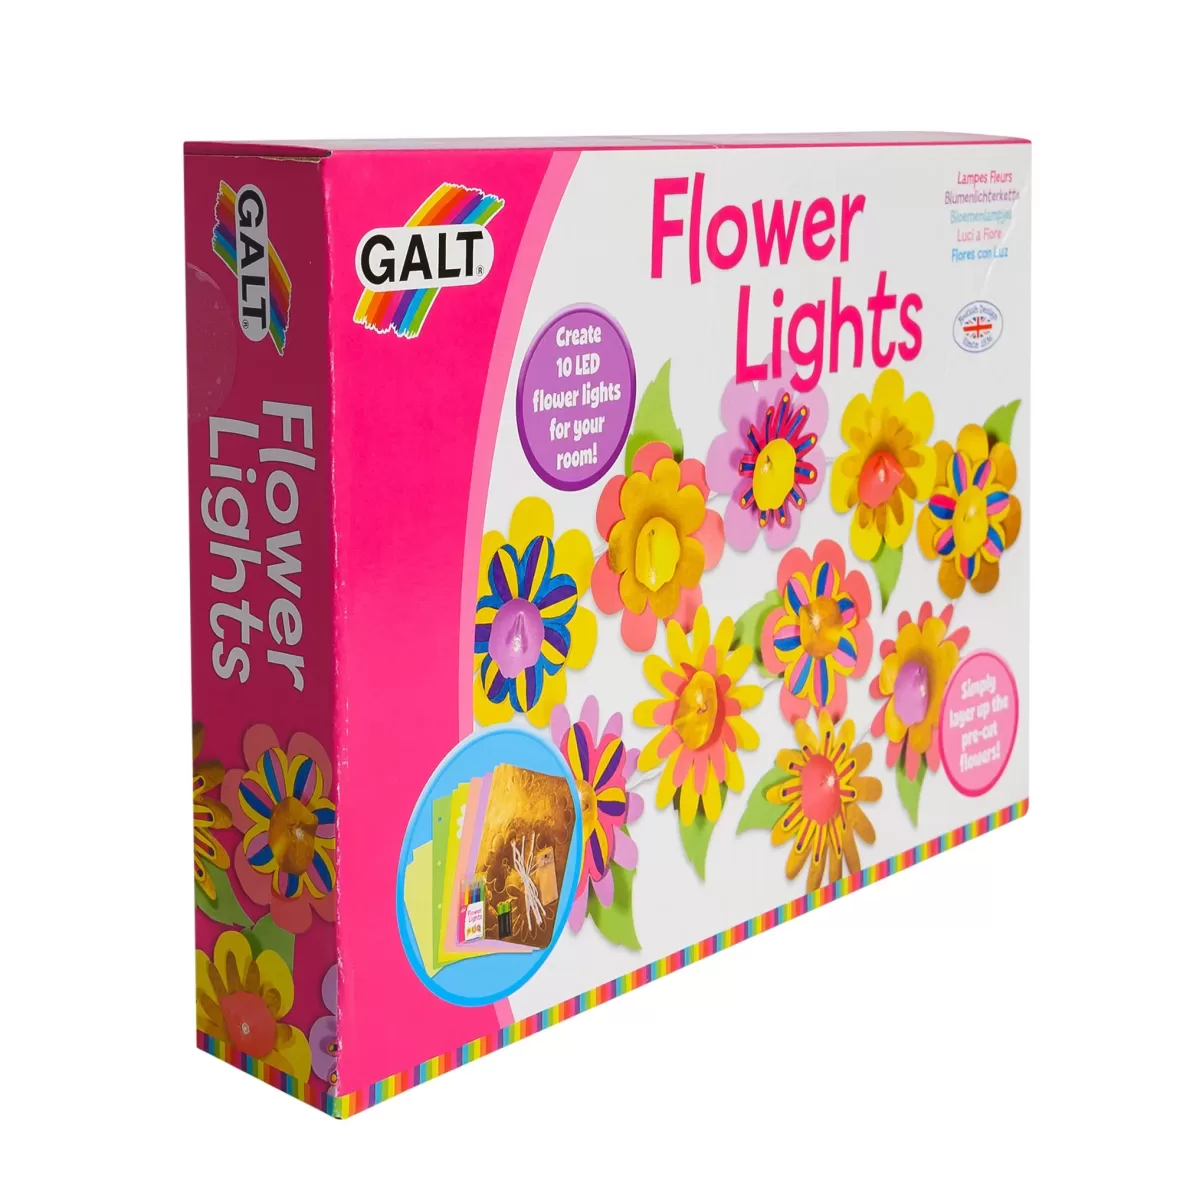 GALT_Flower Lights_2